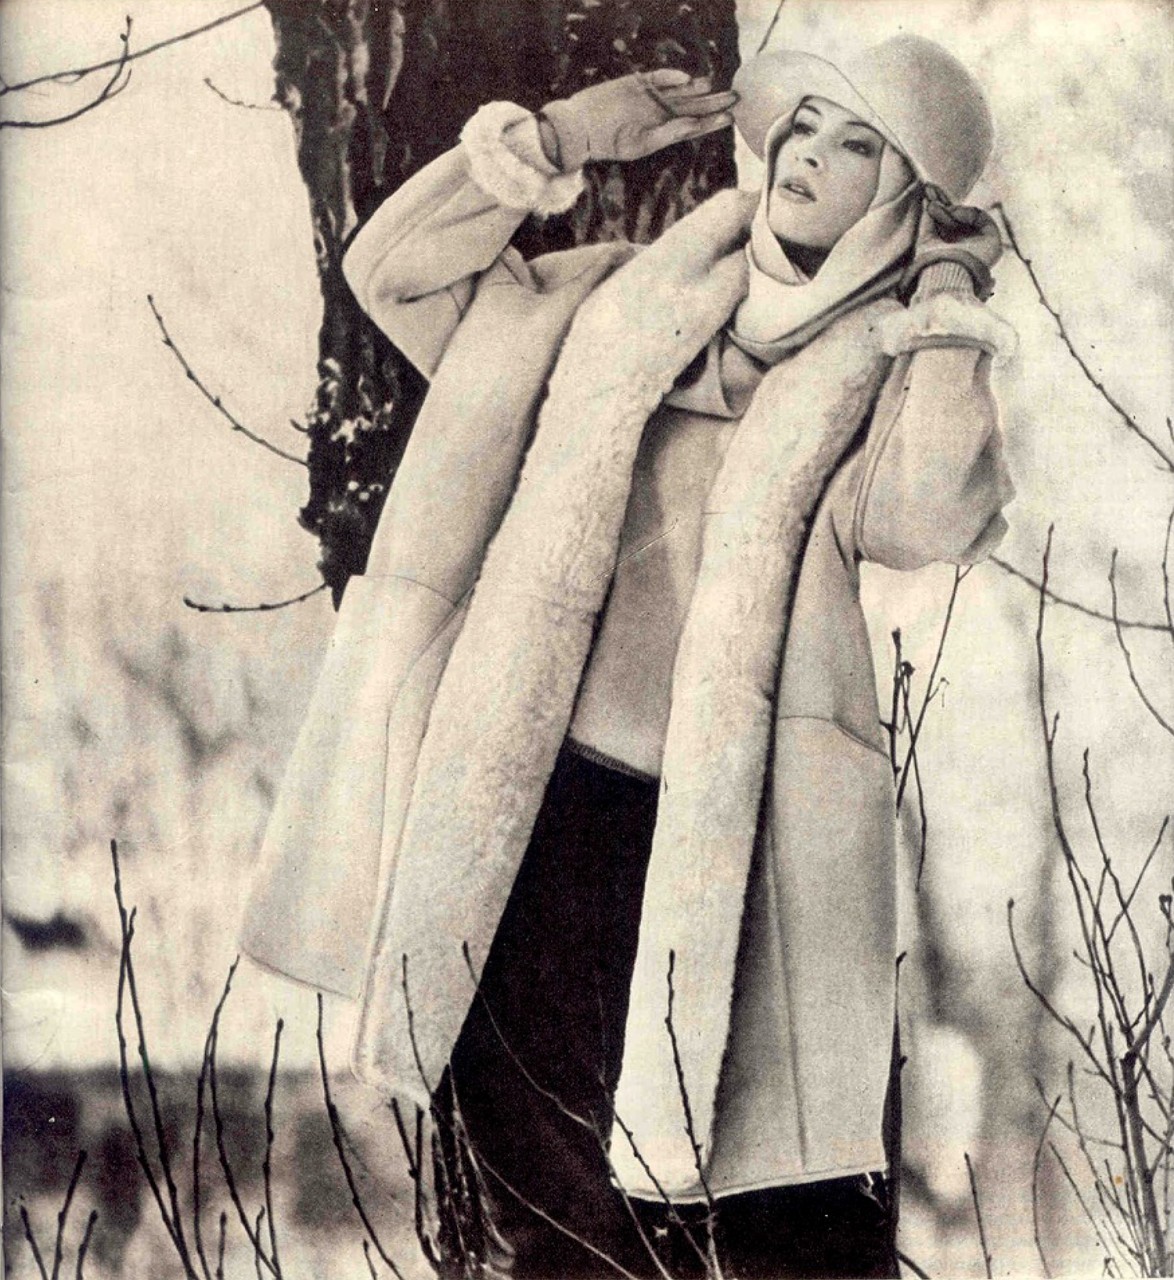 Зимняя мода СССР